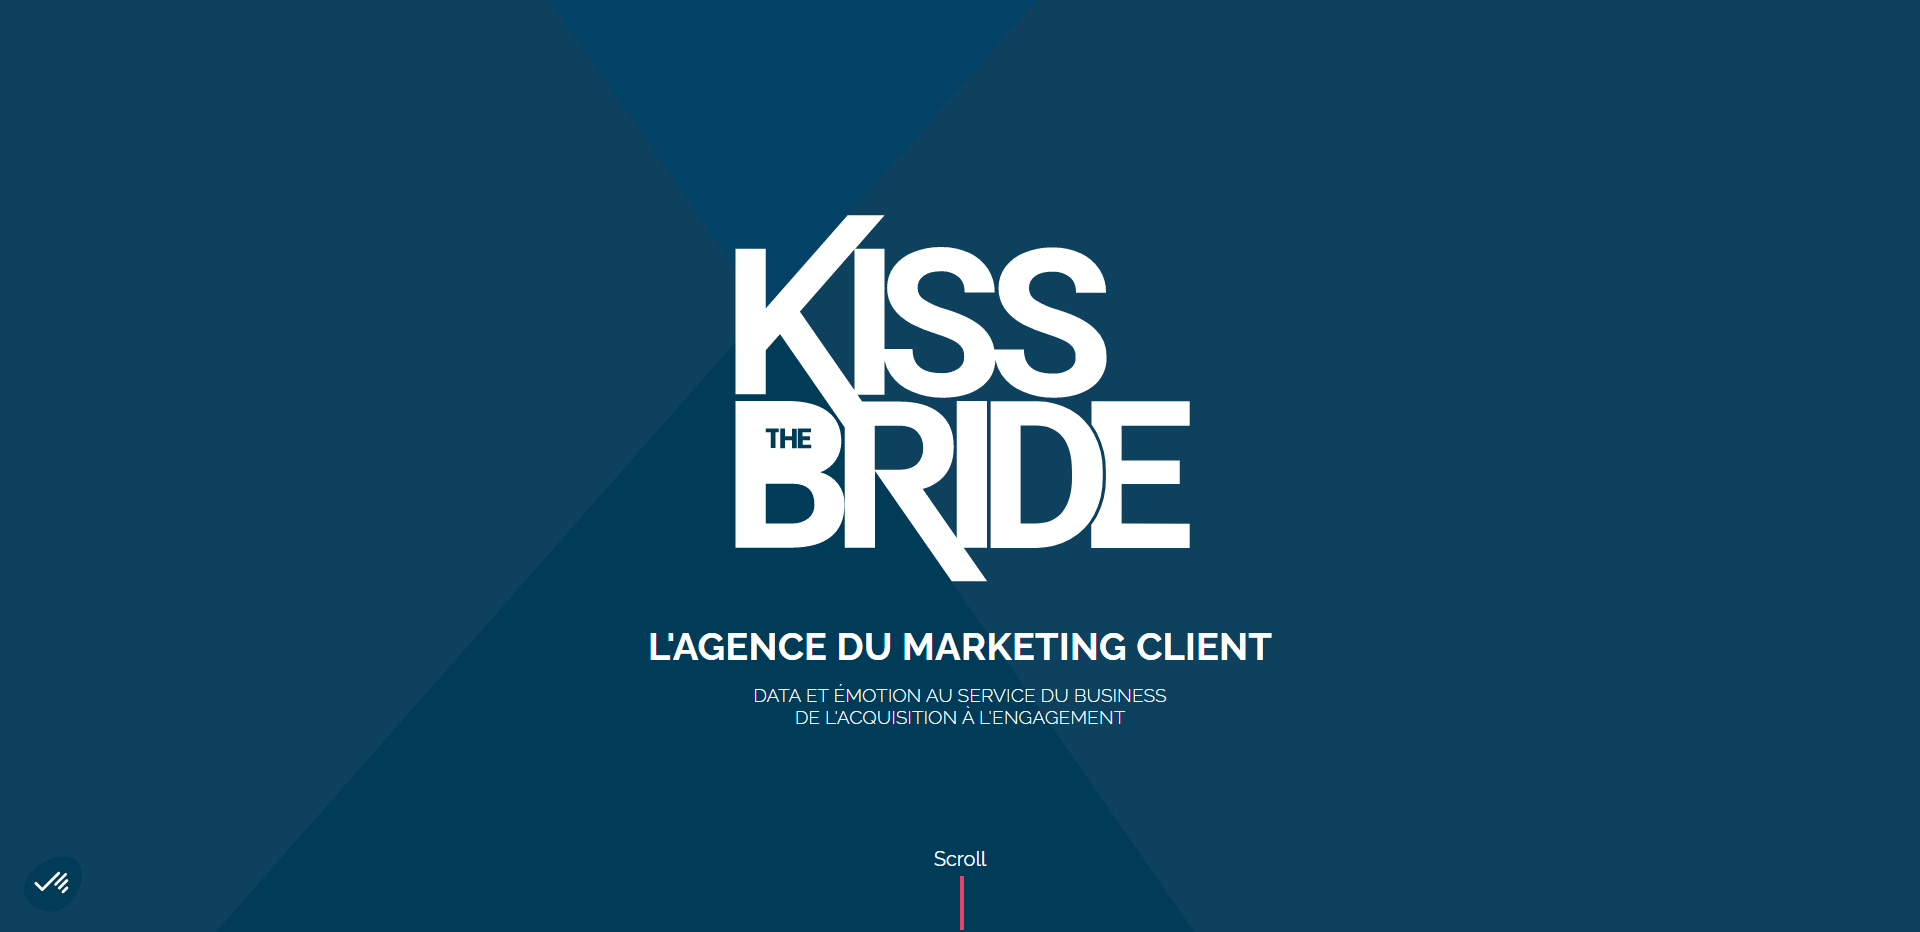 kiss the bride agence crm